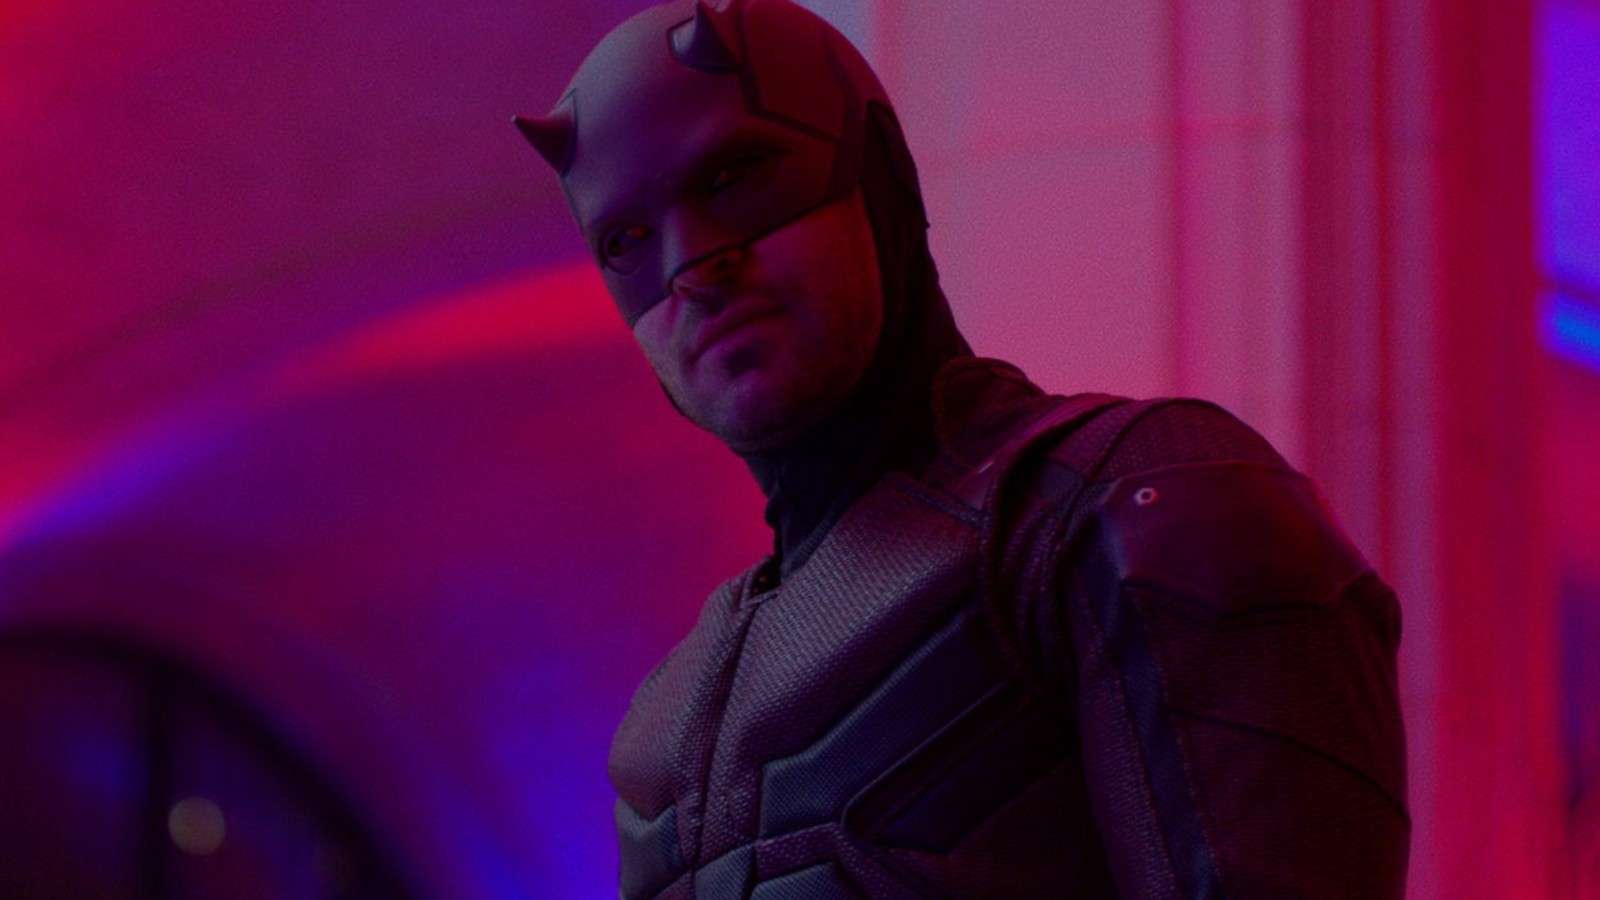 Charlie Cox as Daredevil